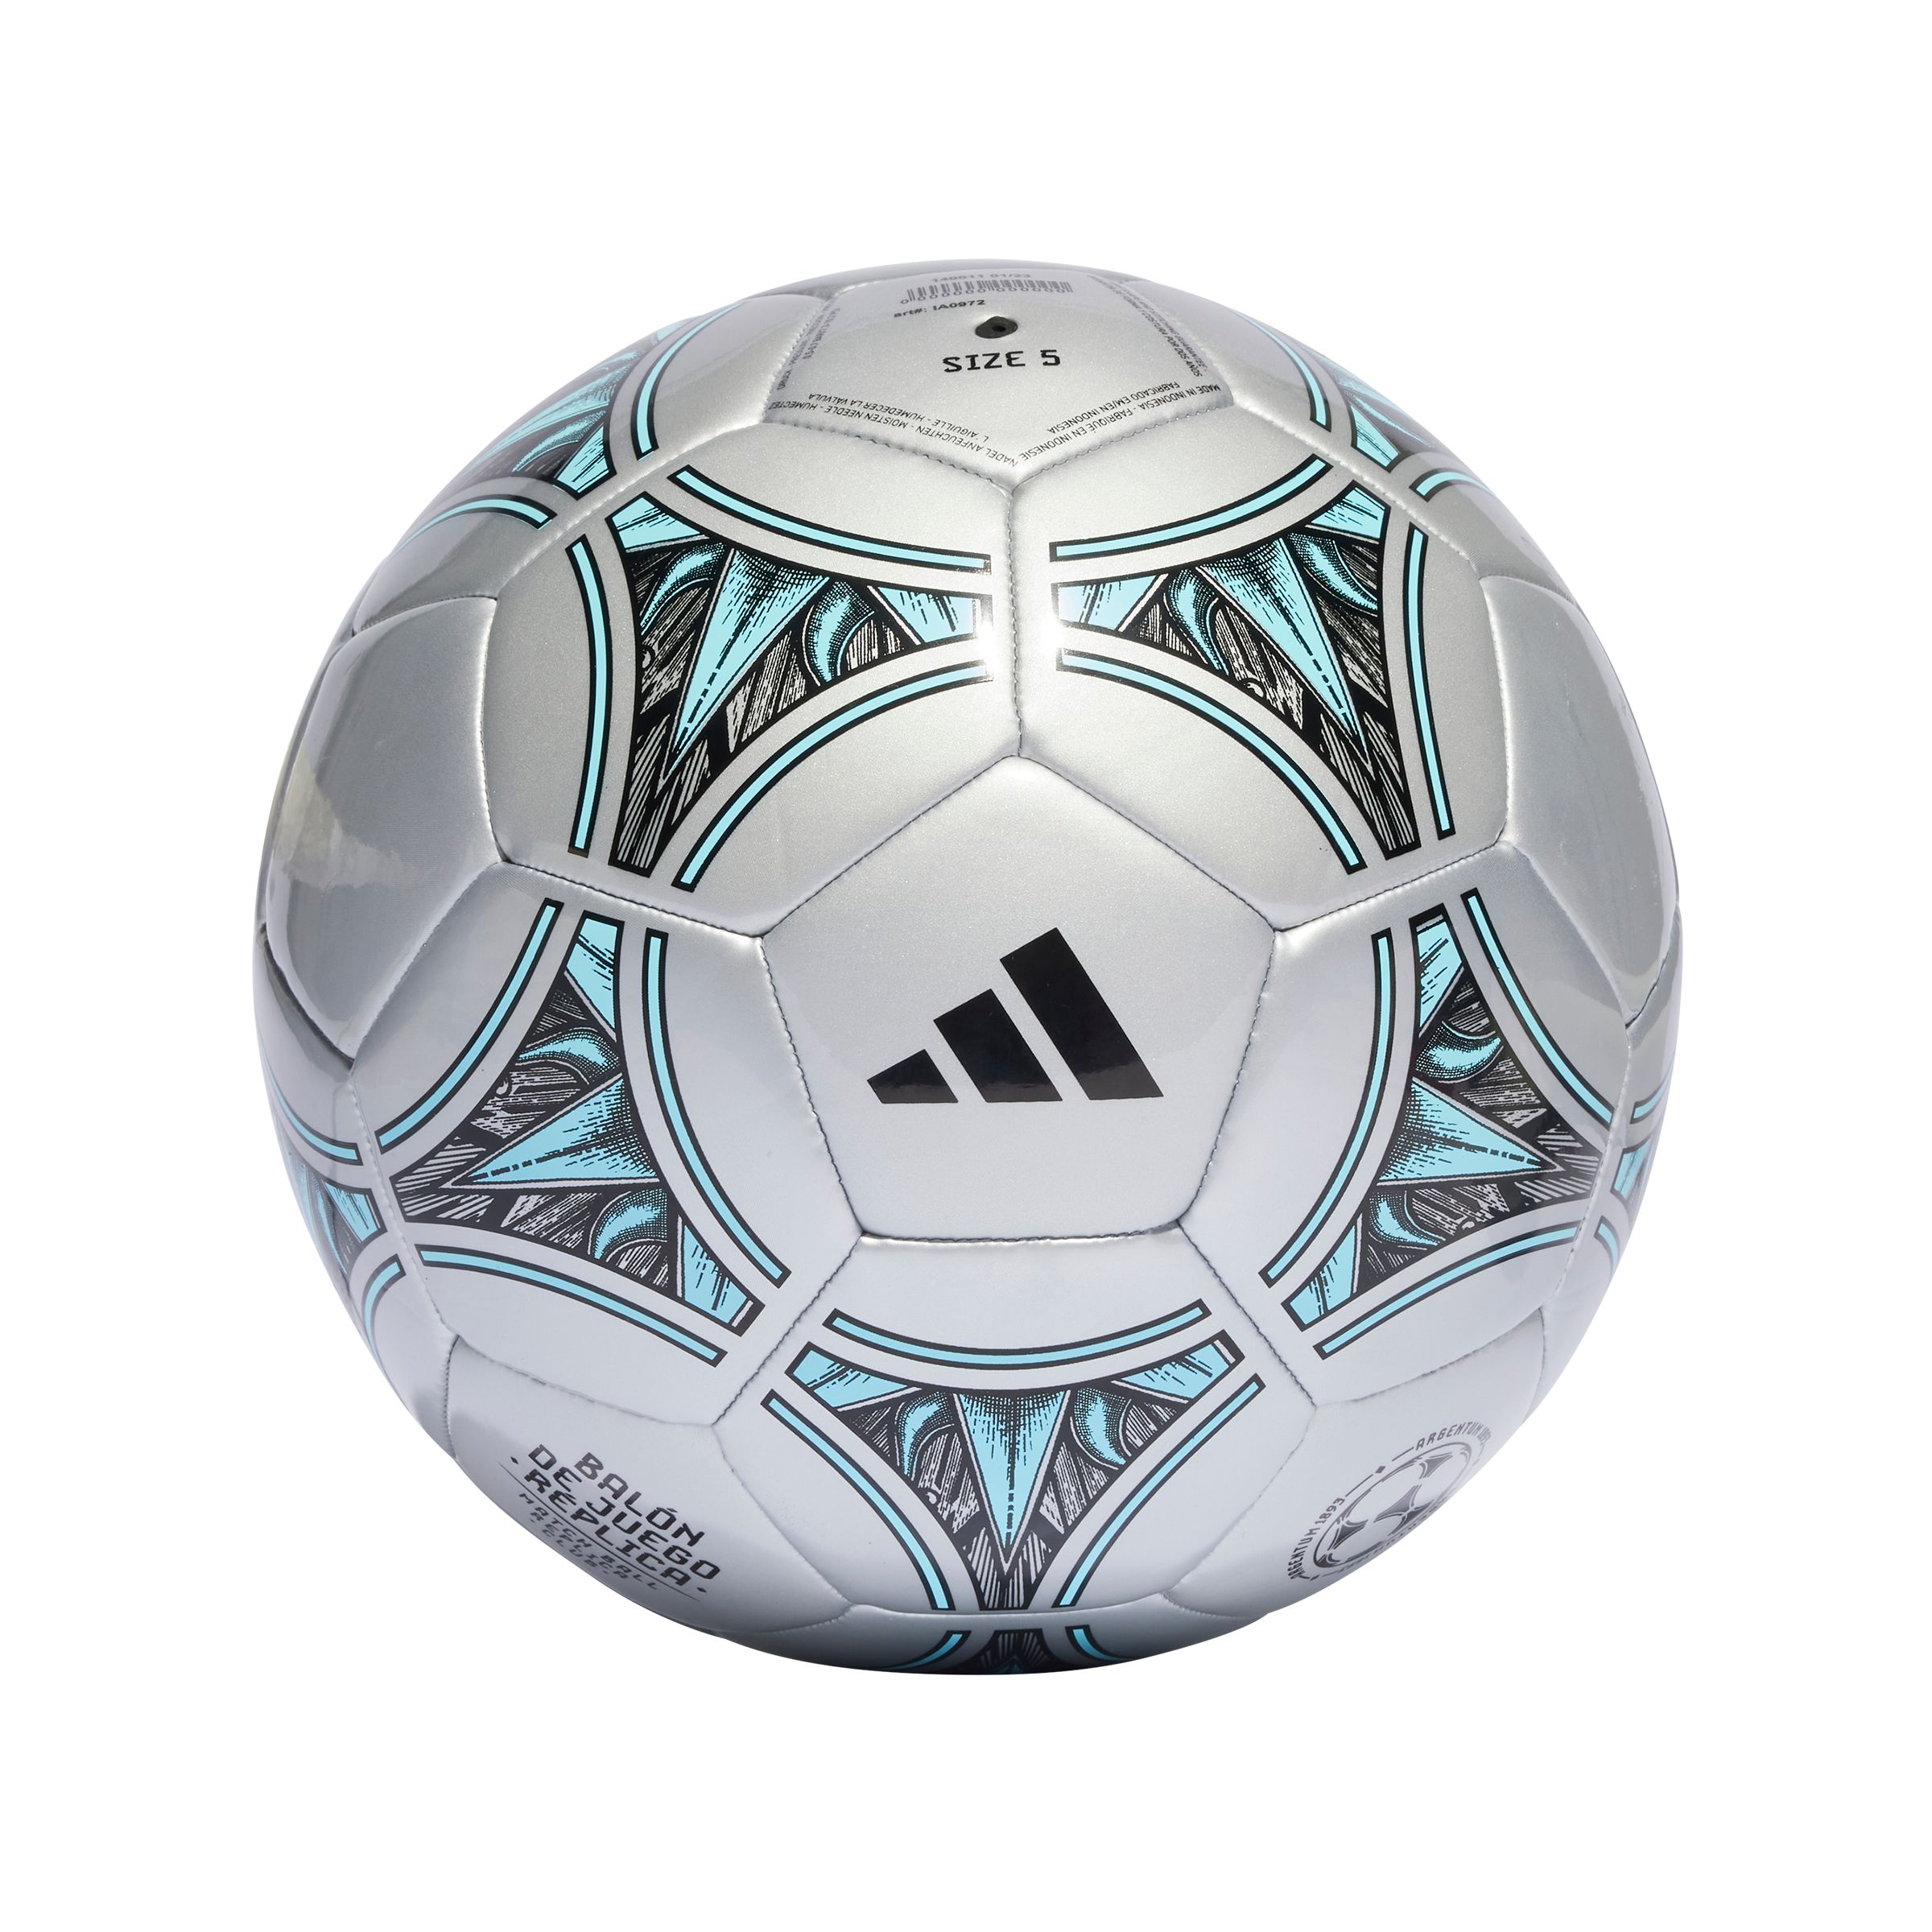 Image of adidas Messi Club Senior Soccer Ball - Size 5